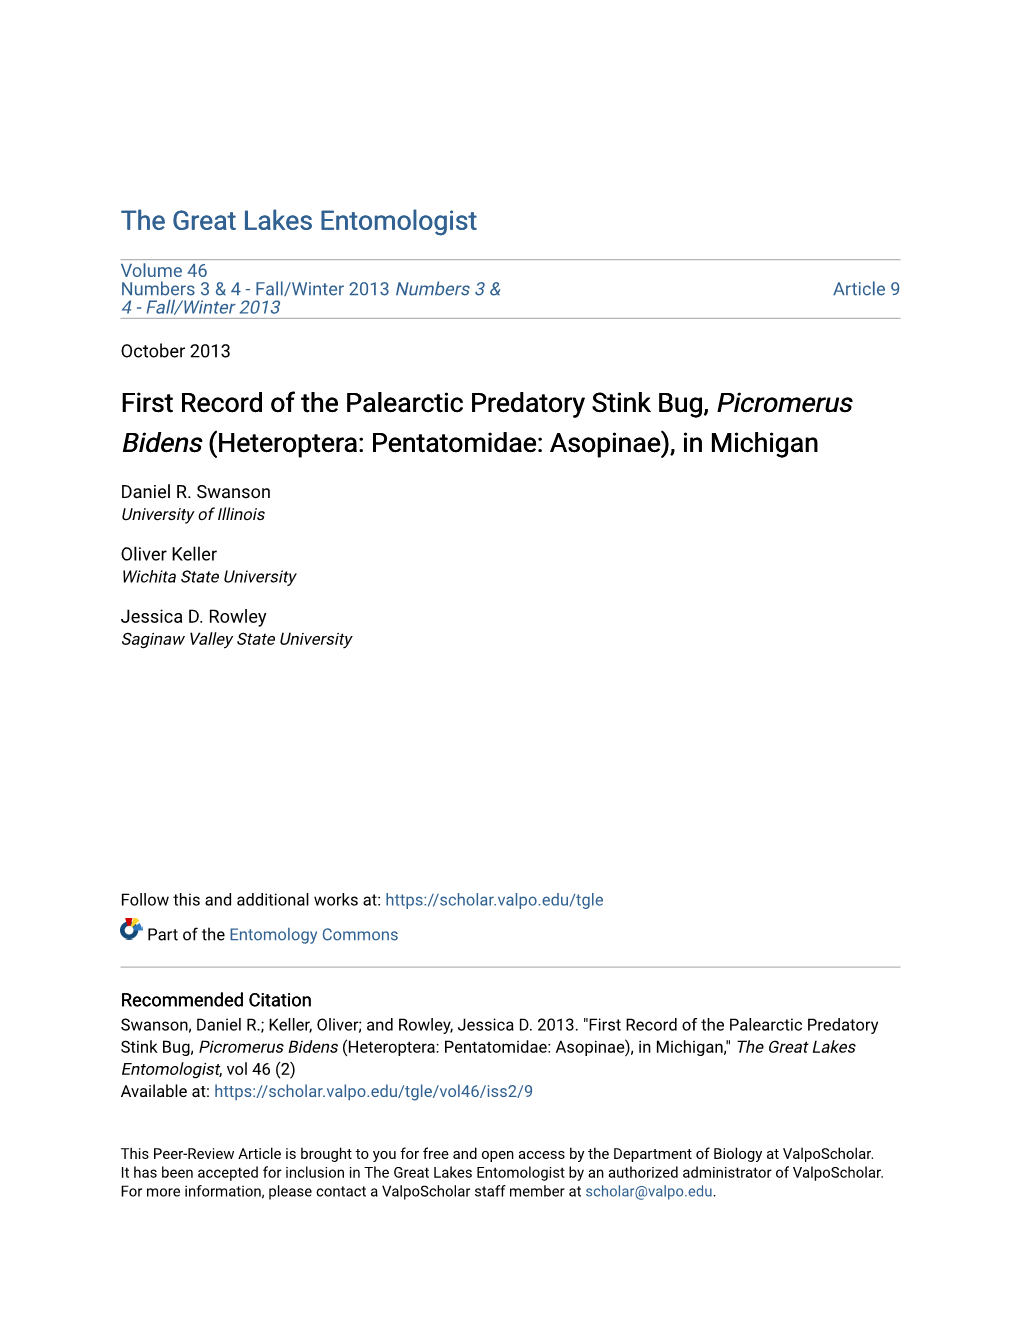 First Record of the Palearctic Predatory Stink Bug, Picromerus Bidens (Heteroptera: Pentatomidae: Asopinae), in Michigan